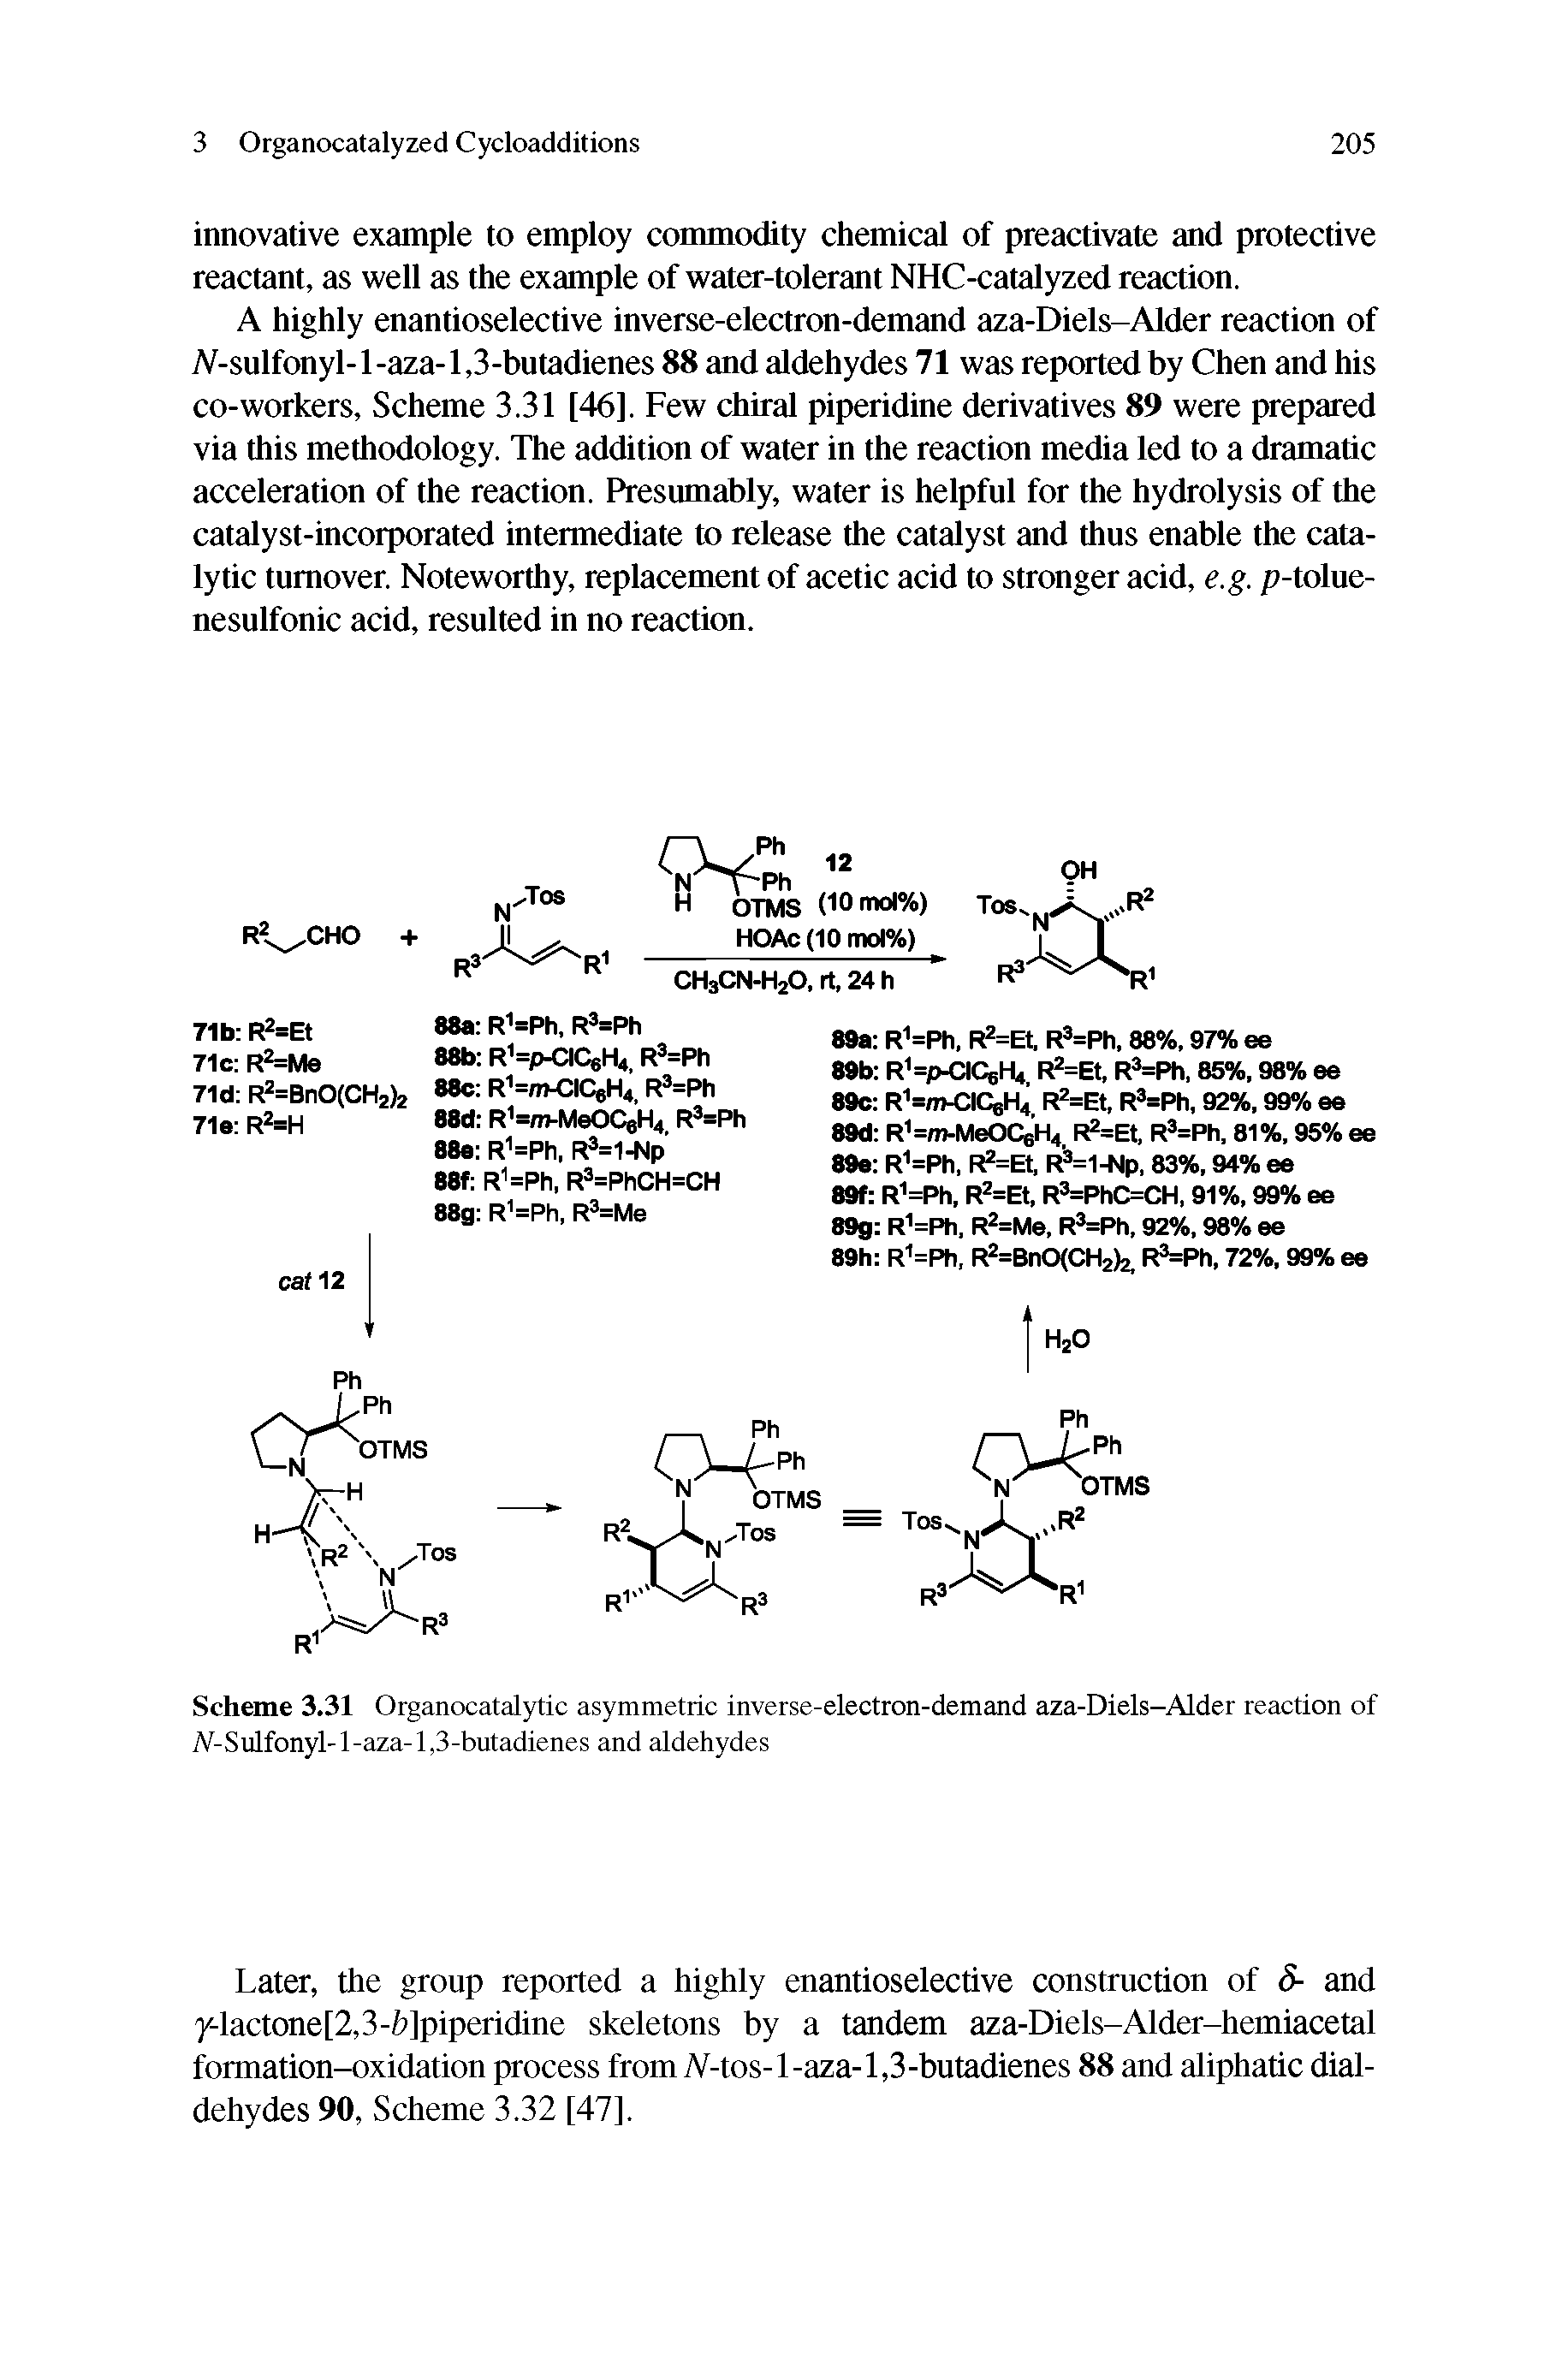 Scheme 3.31 Organocatalytic asymmetric inverse-electron-demand aza-Diels-Alder reaction of A-Sulfonyl-l-aza-1,3-butadienes and aldehydes...